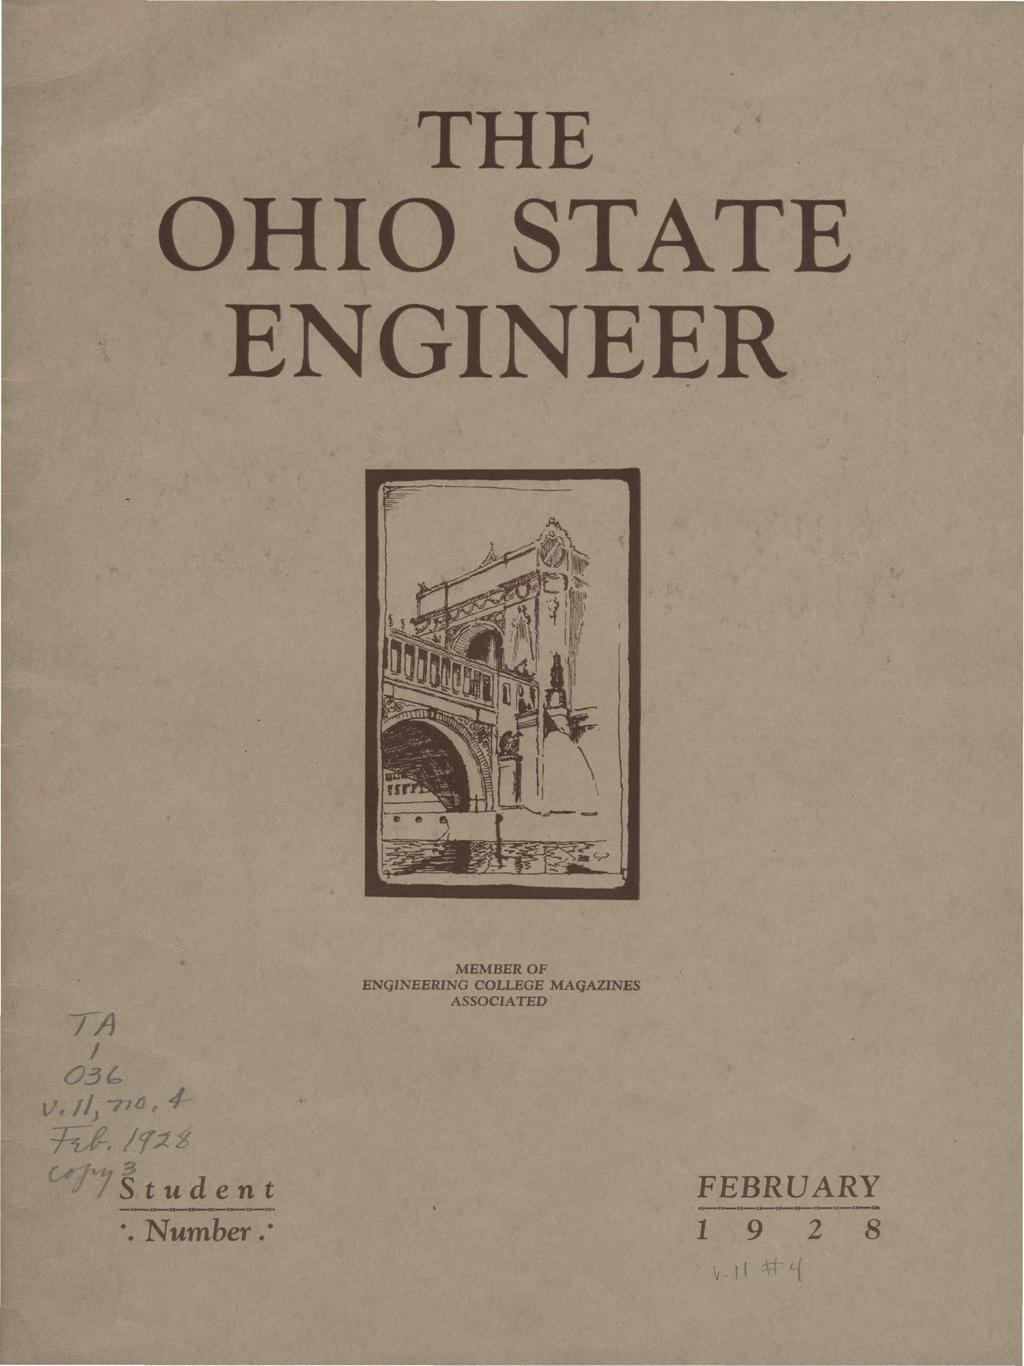 THE OHIO STATE ENGINEER TA O36 4 MEMBER OF ENGINEERING